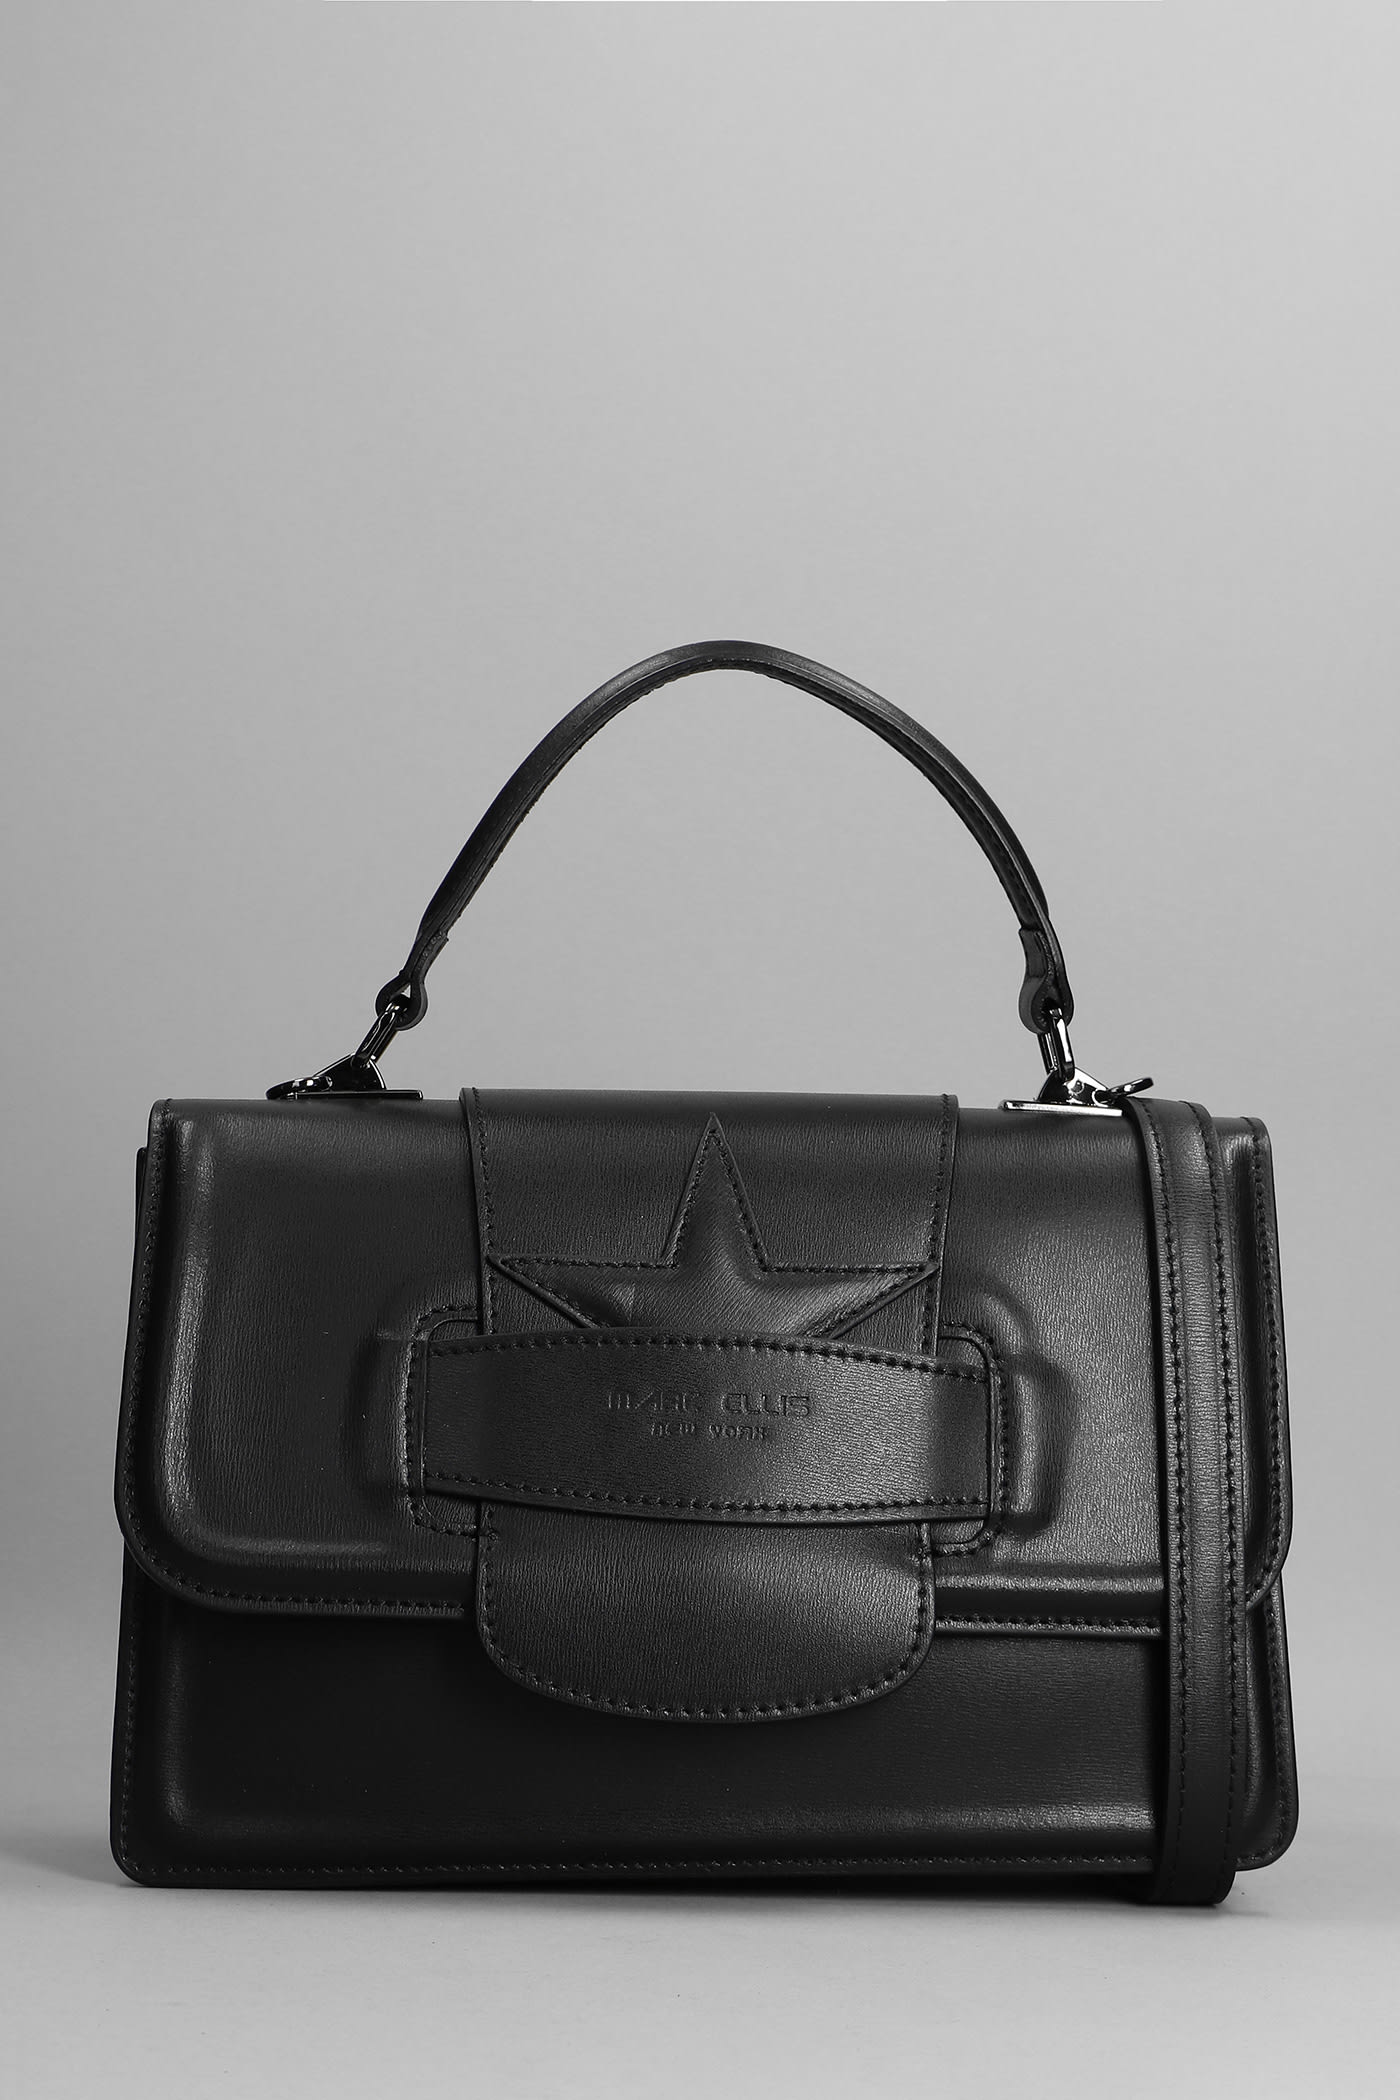 Marc Ellis Blazer Hand Bag In Black Leather